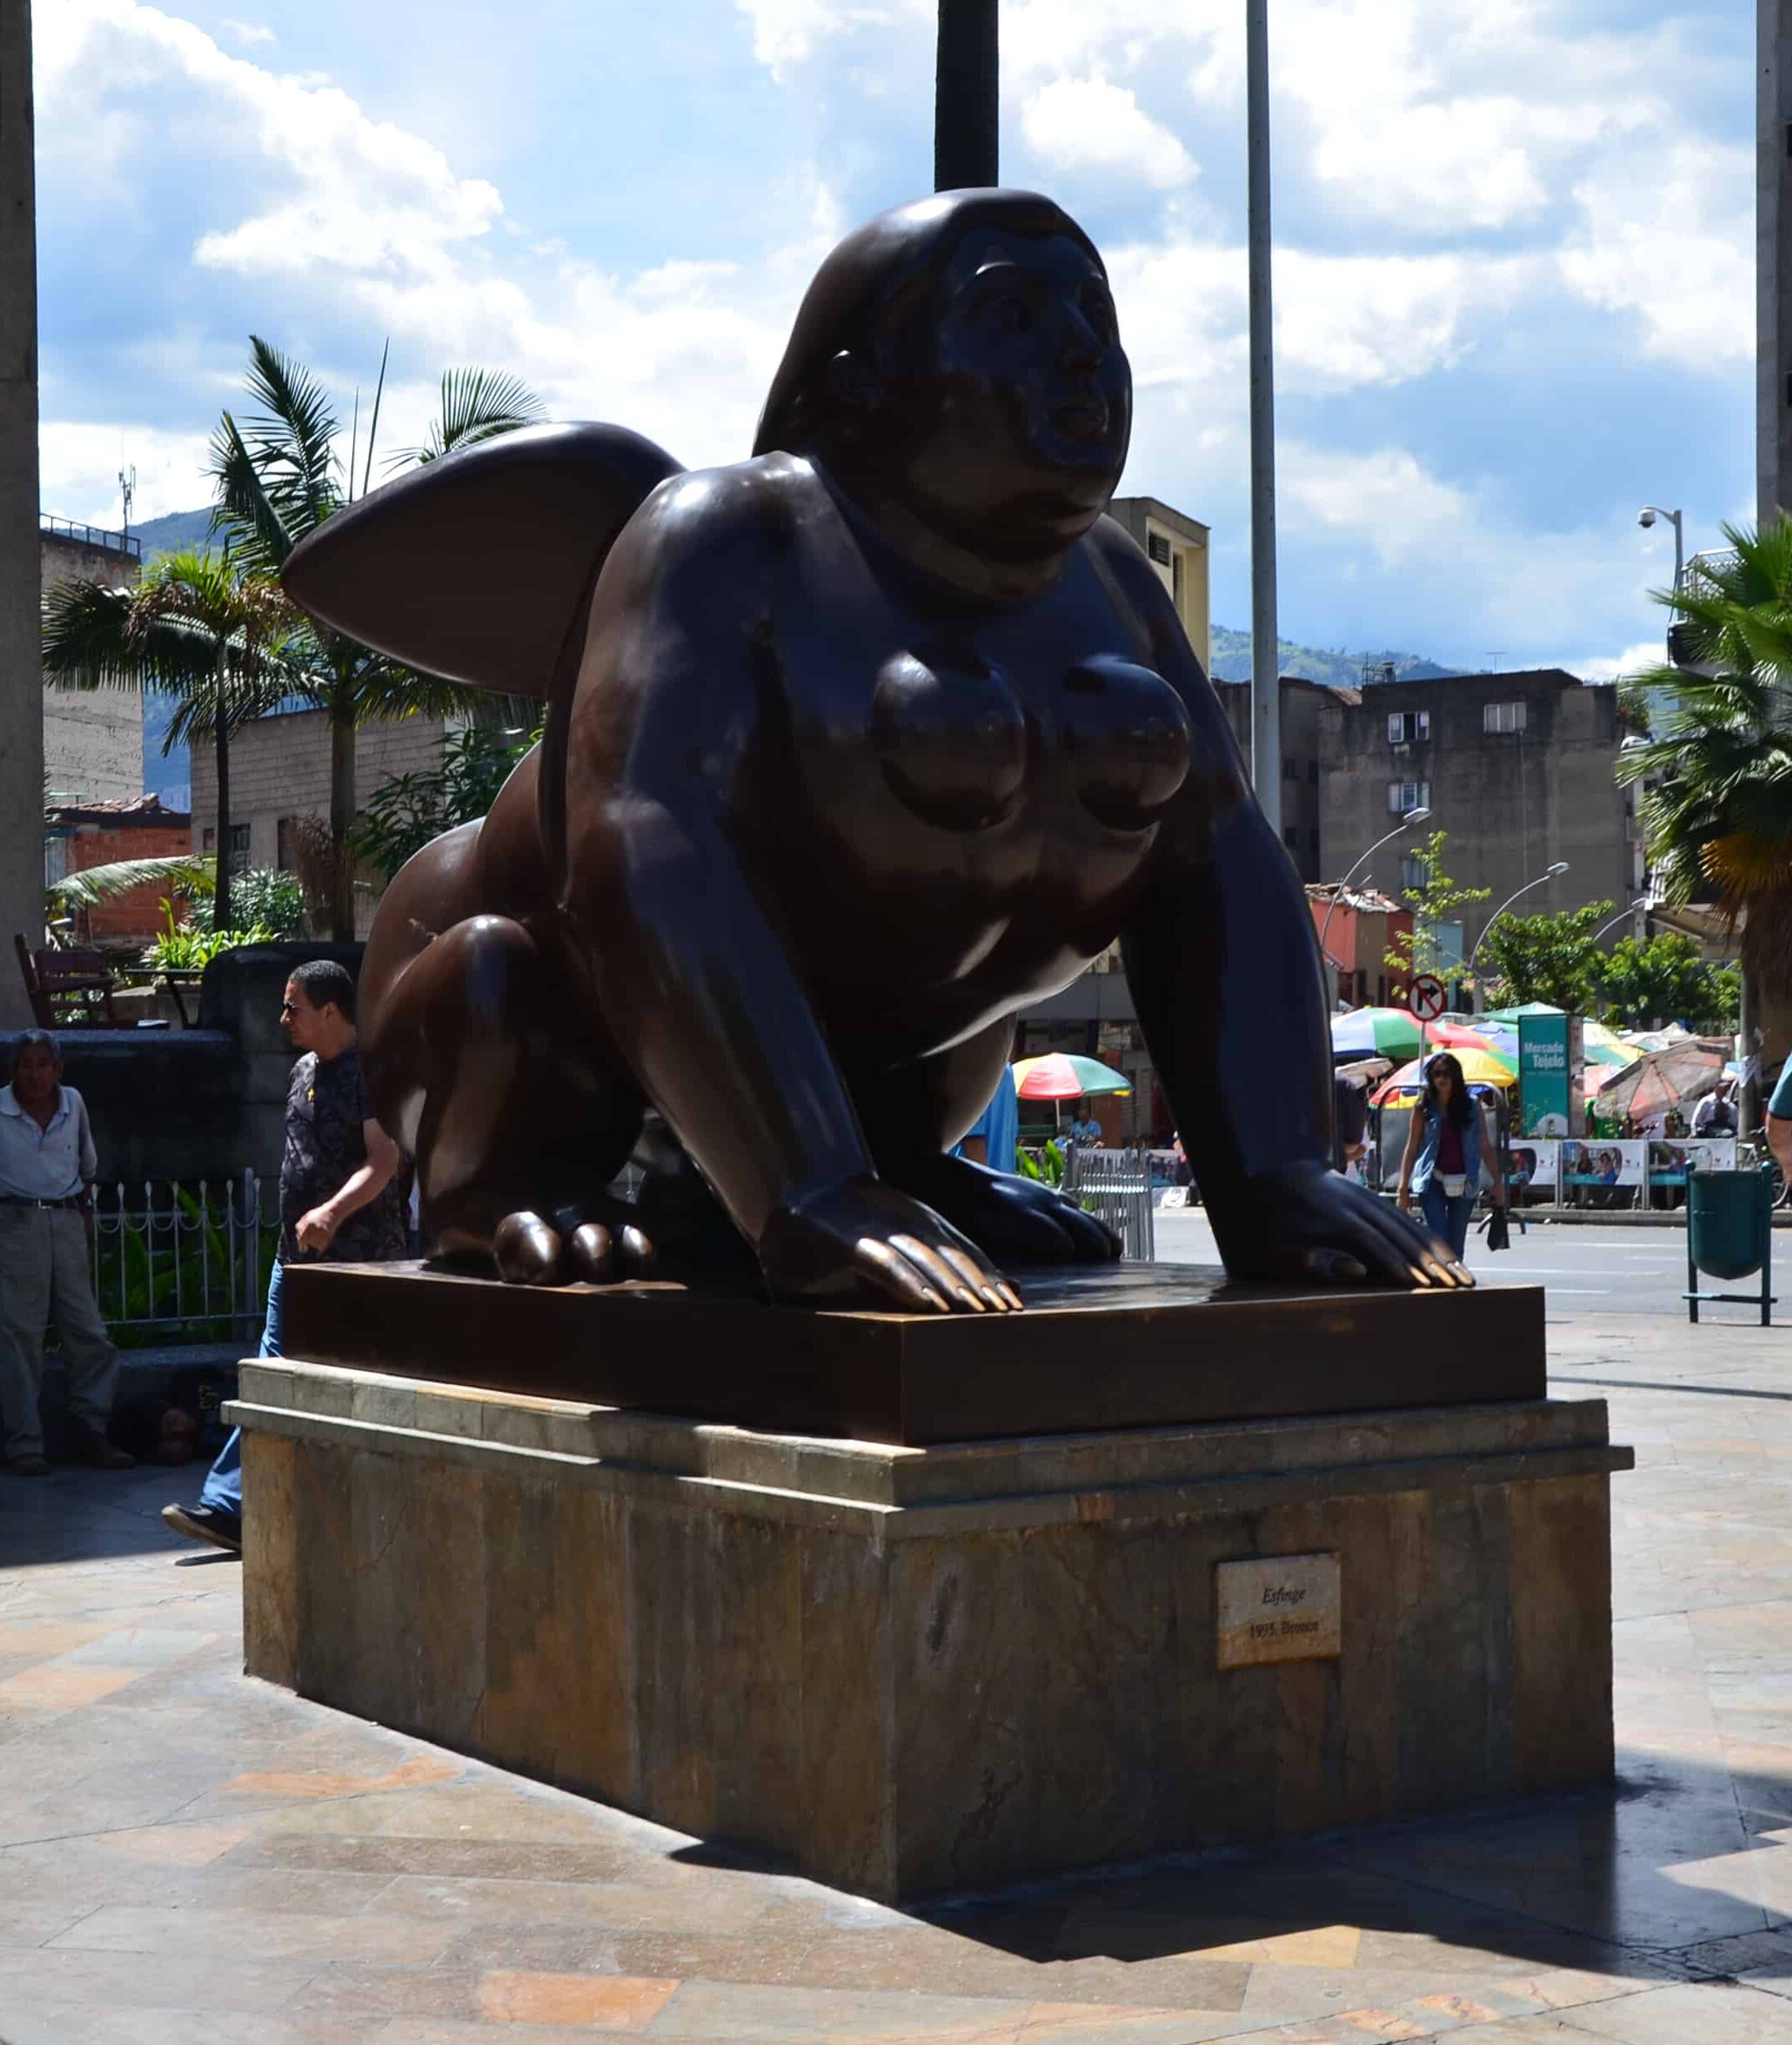 Esfinge (Sphinx) at Plaza Botero in Medellín, Antioquia, Colombia